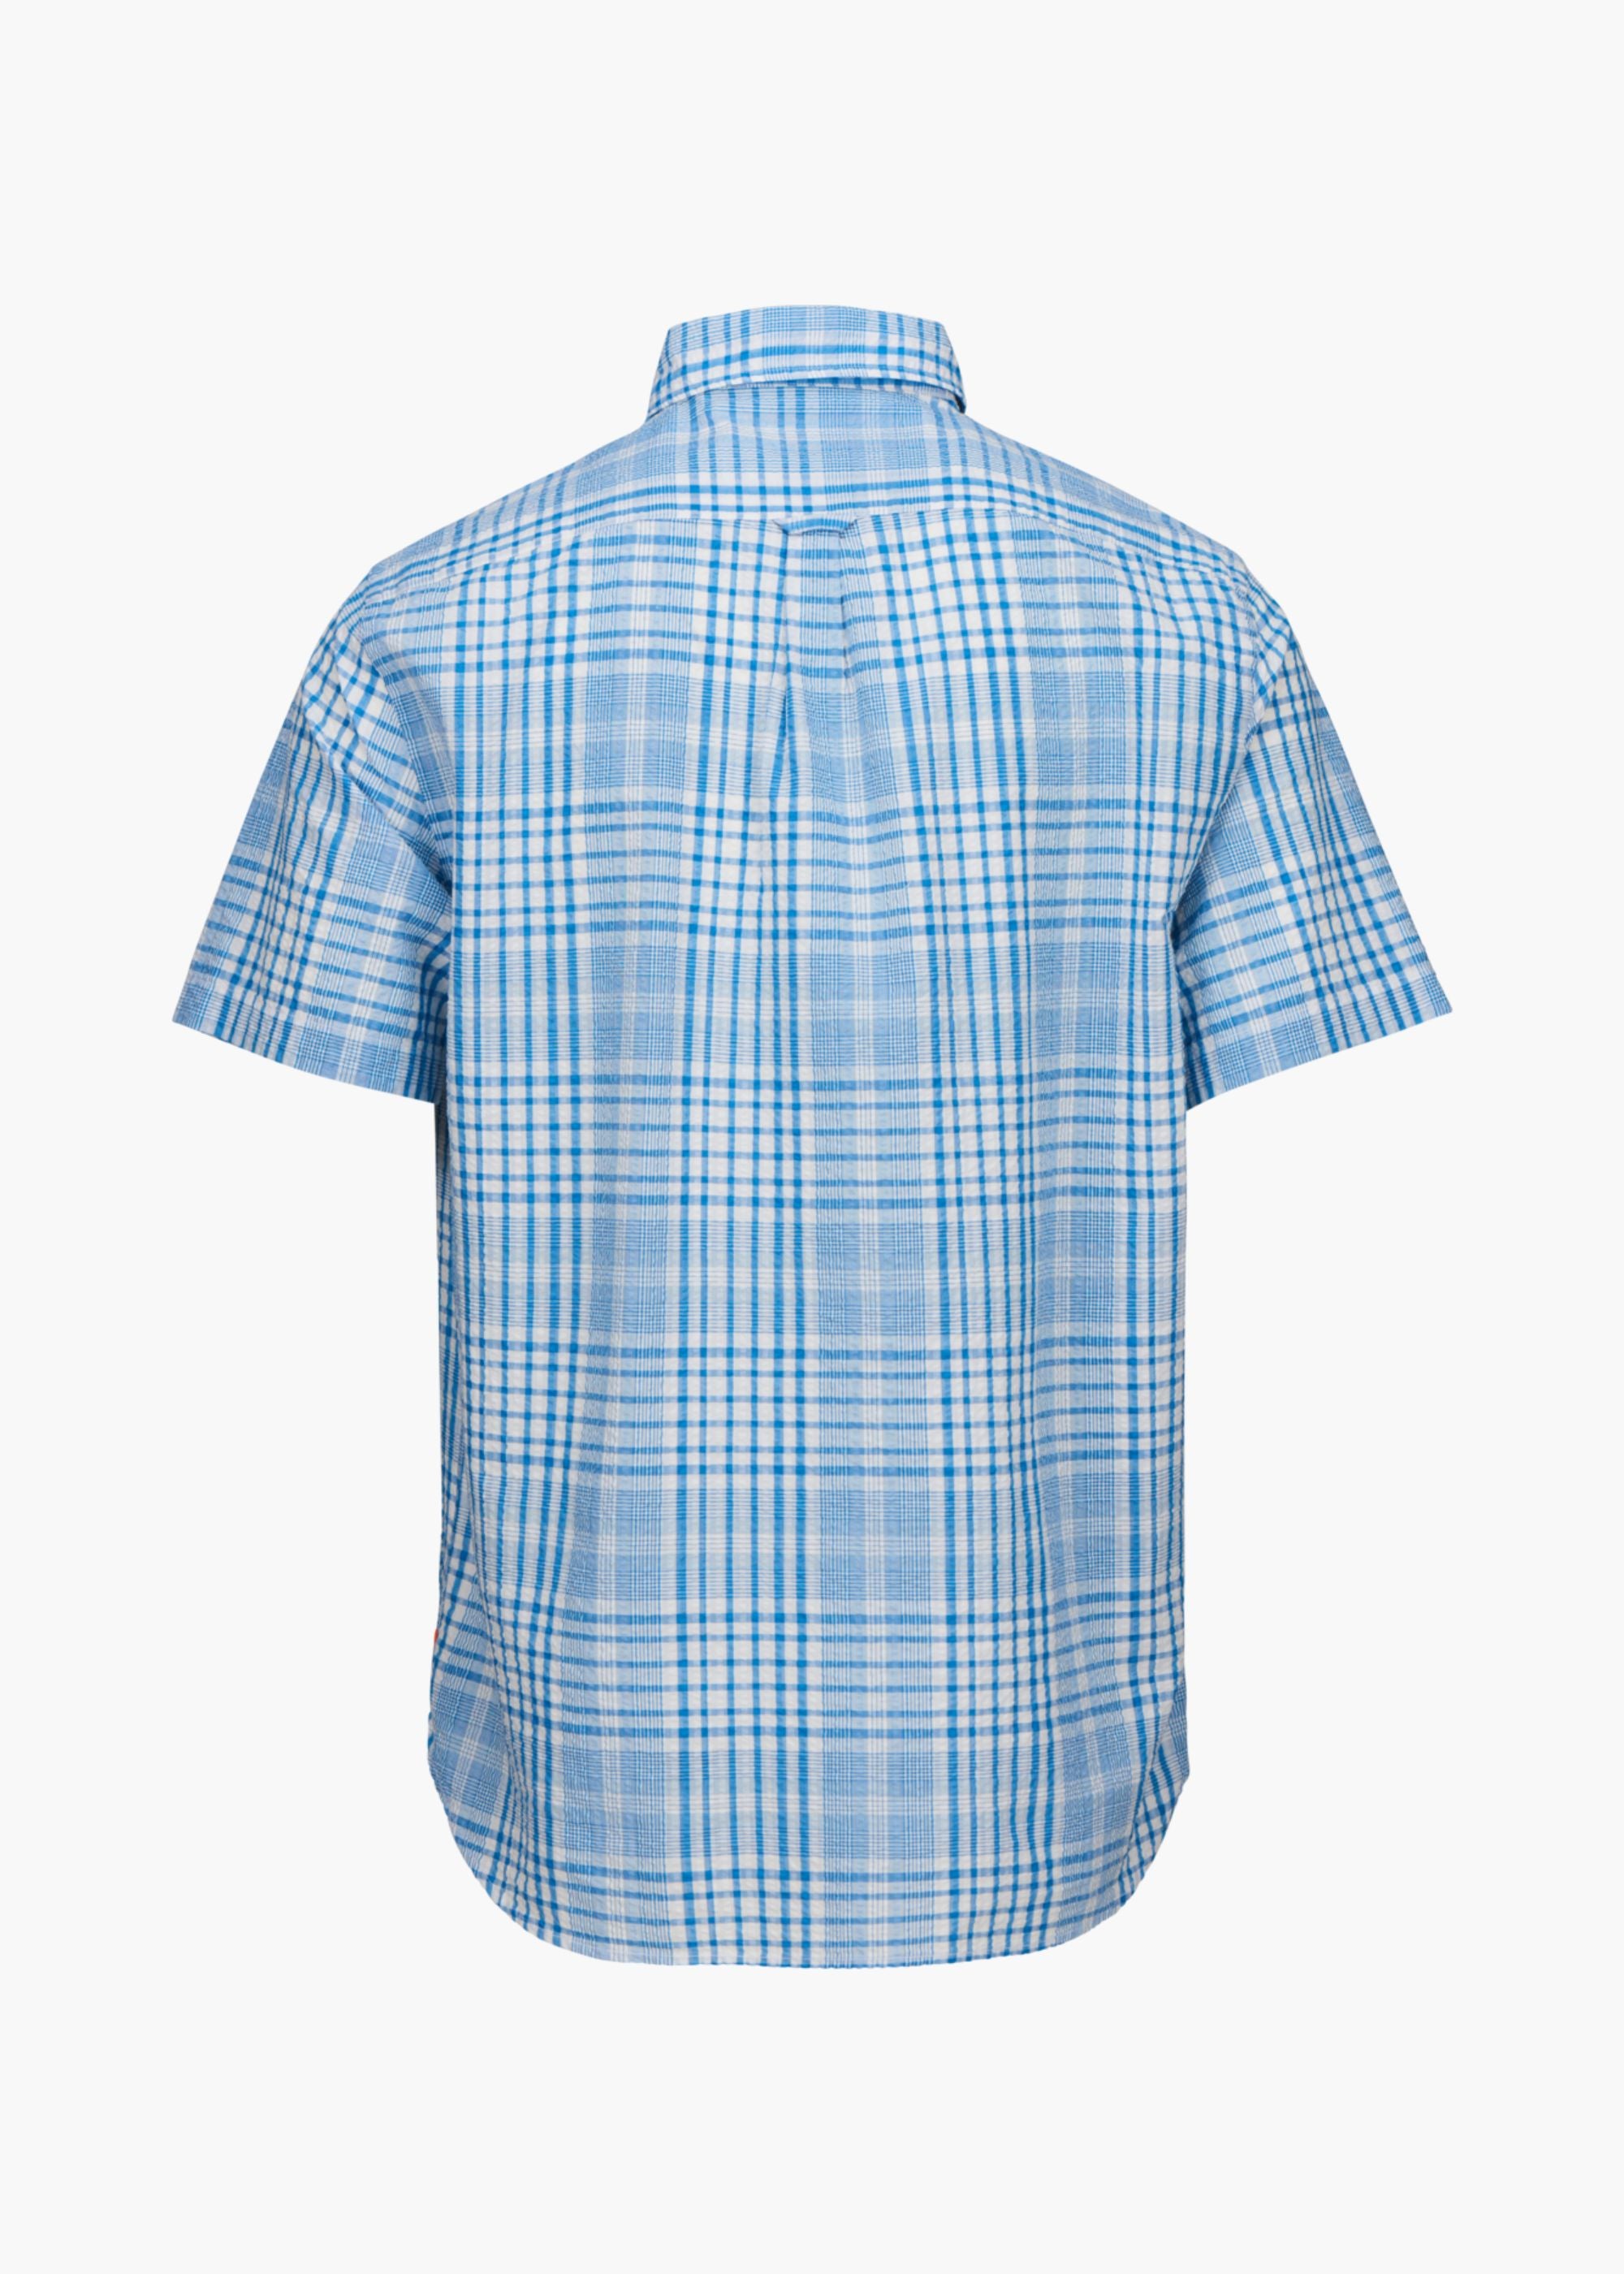 Furore Woven Shirt - background::white,variant::Blue Skies